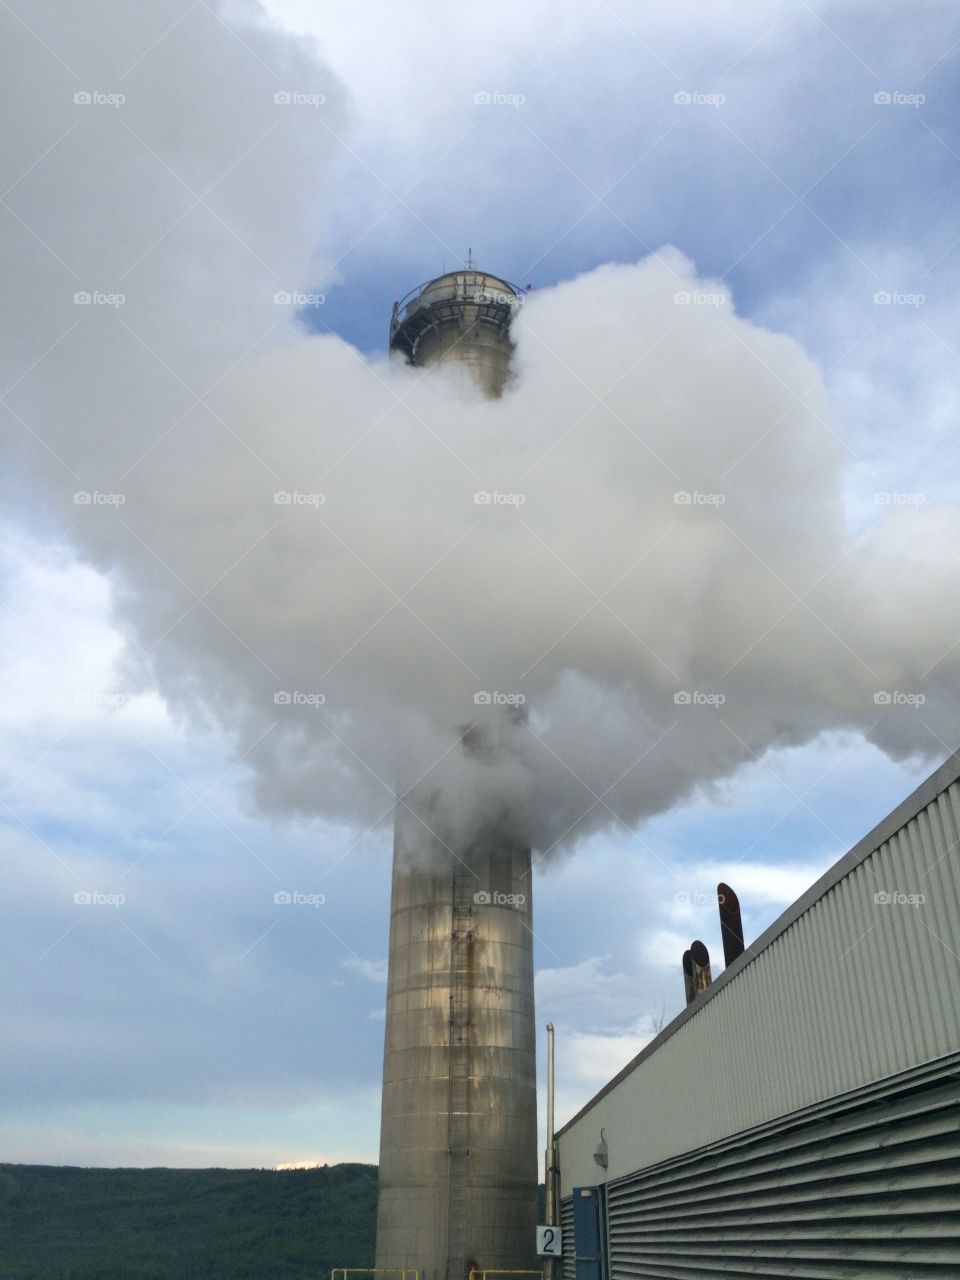 Steam or smoke?